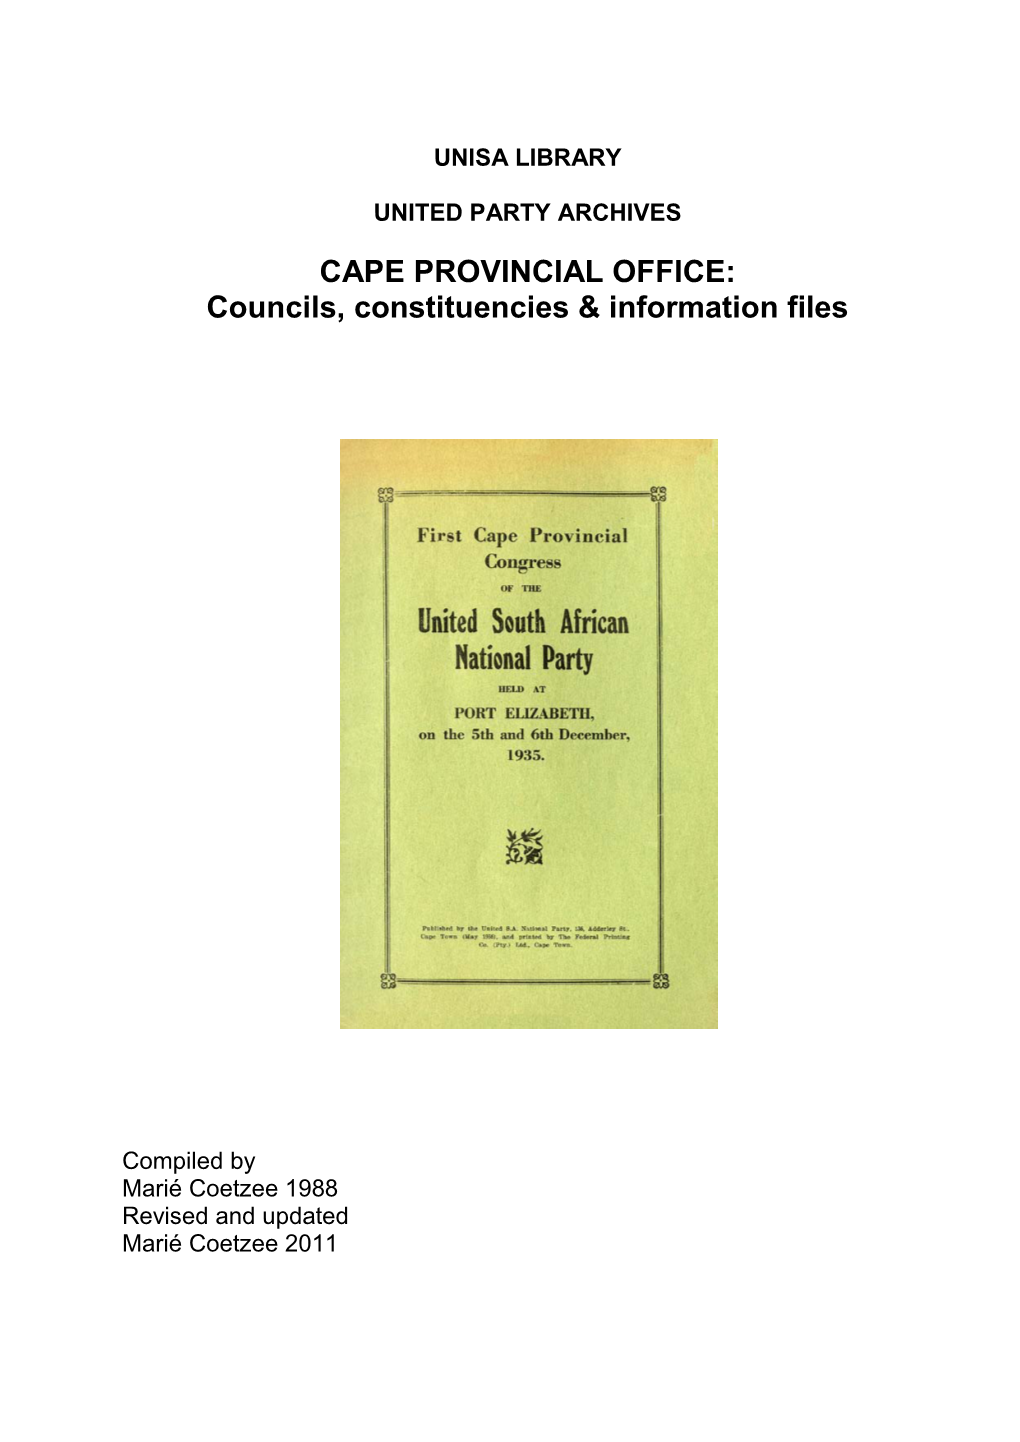 CAPE PROVINCIAL OFFICE: Councils, Constituencies & Information Files